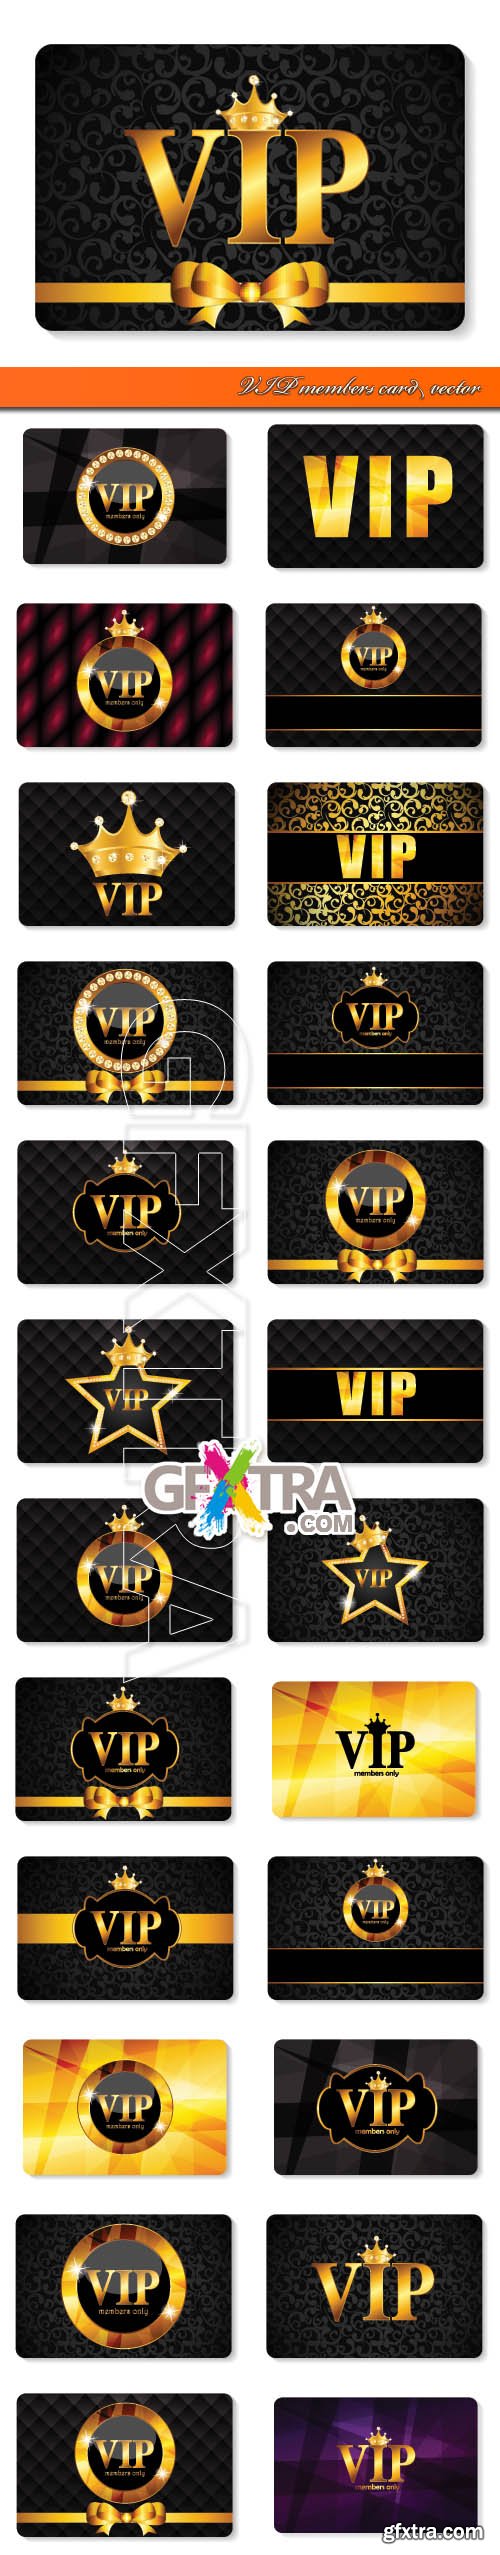 VIP members card vector